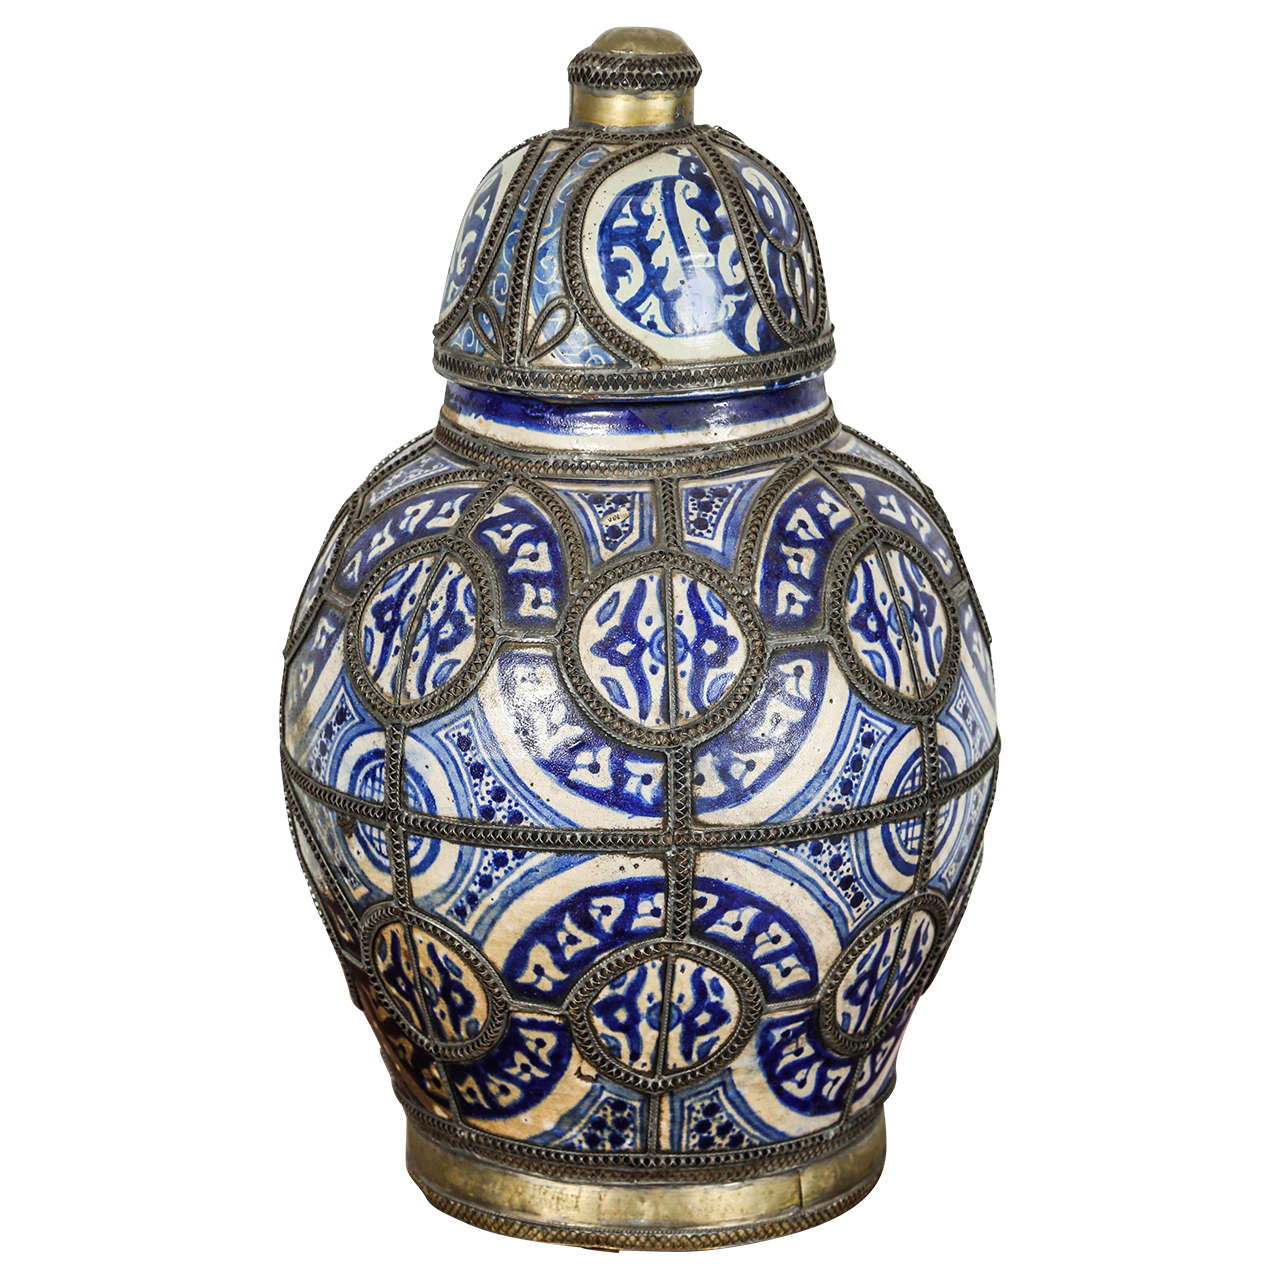 Moorish Moroccan Blue and White Ceramic Vase from Fez